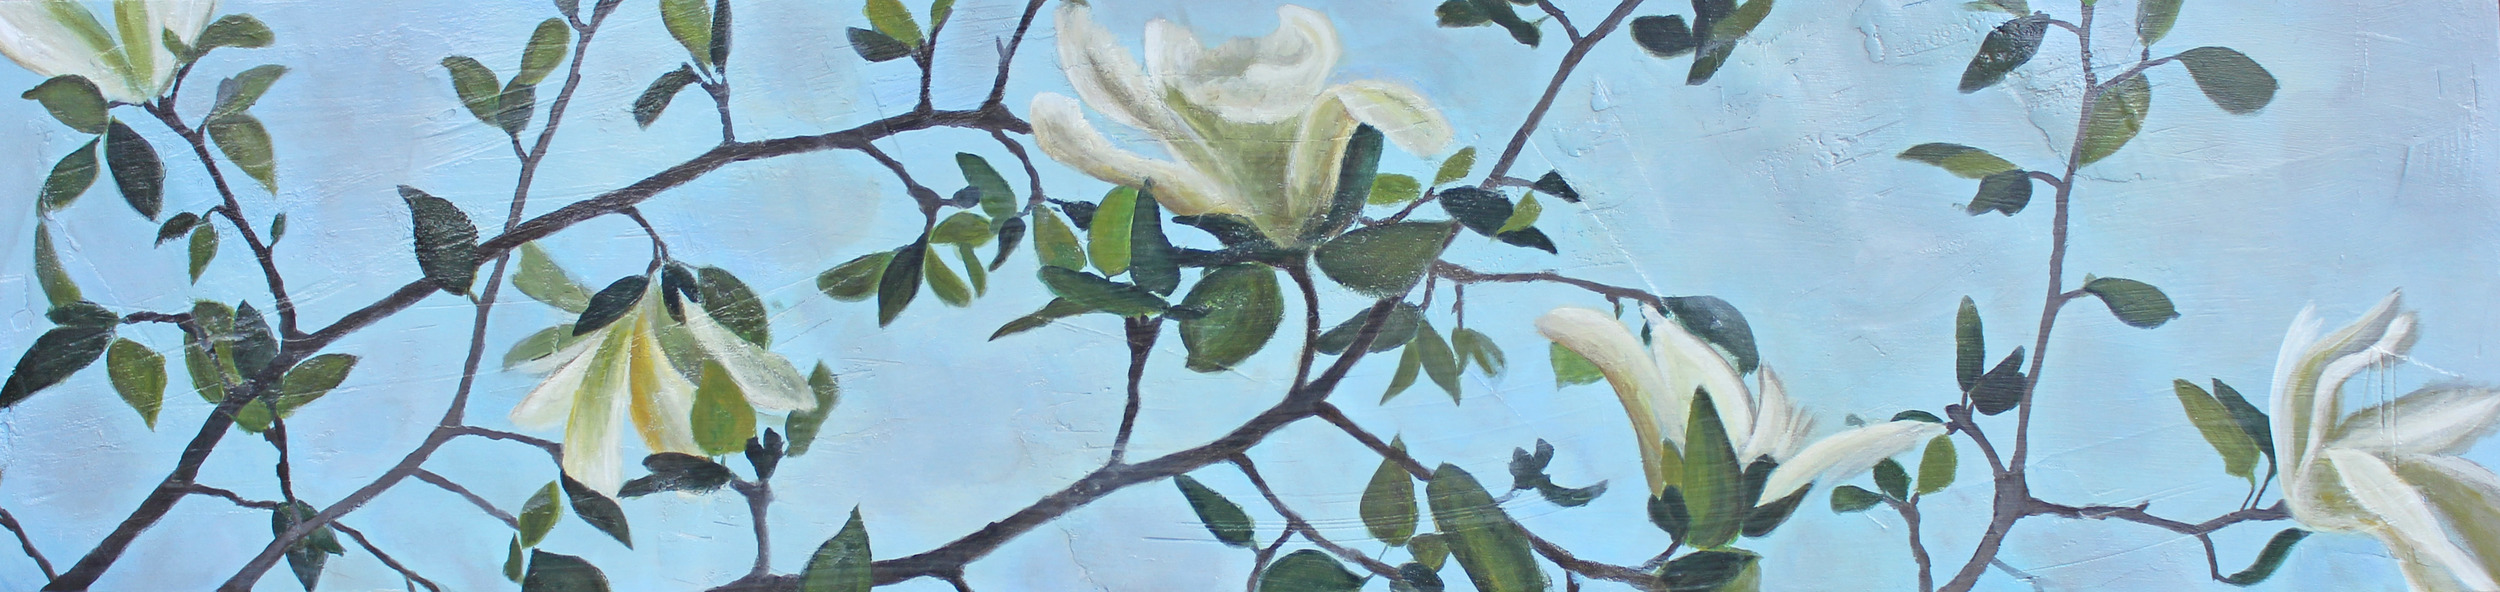 magnolia #4 10''x50''.jpg